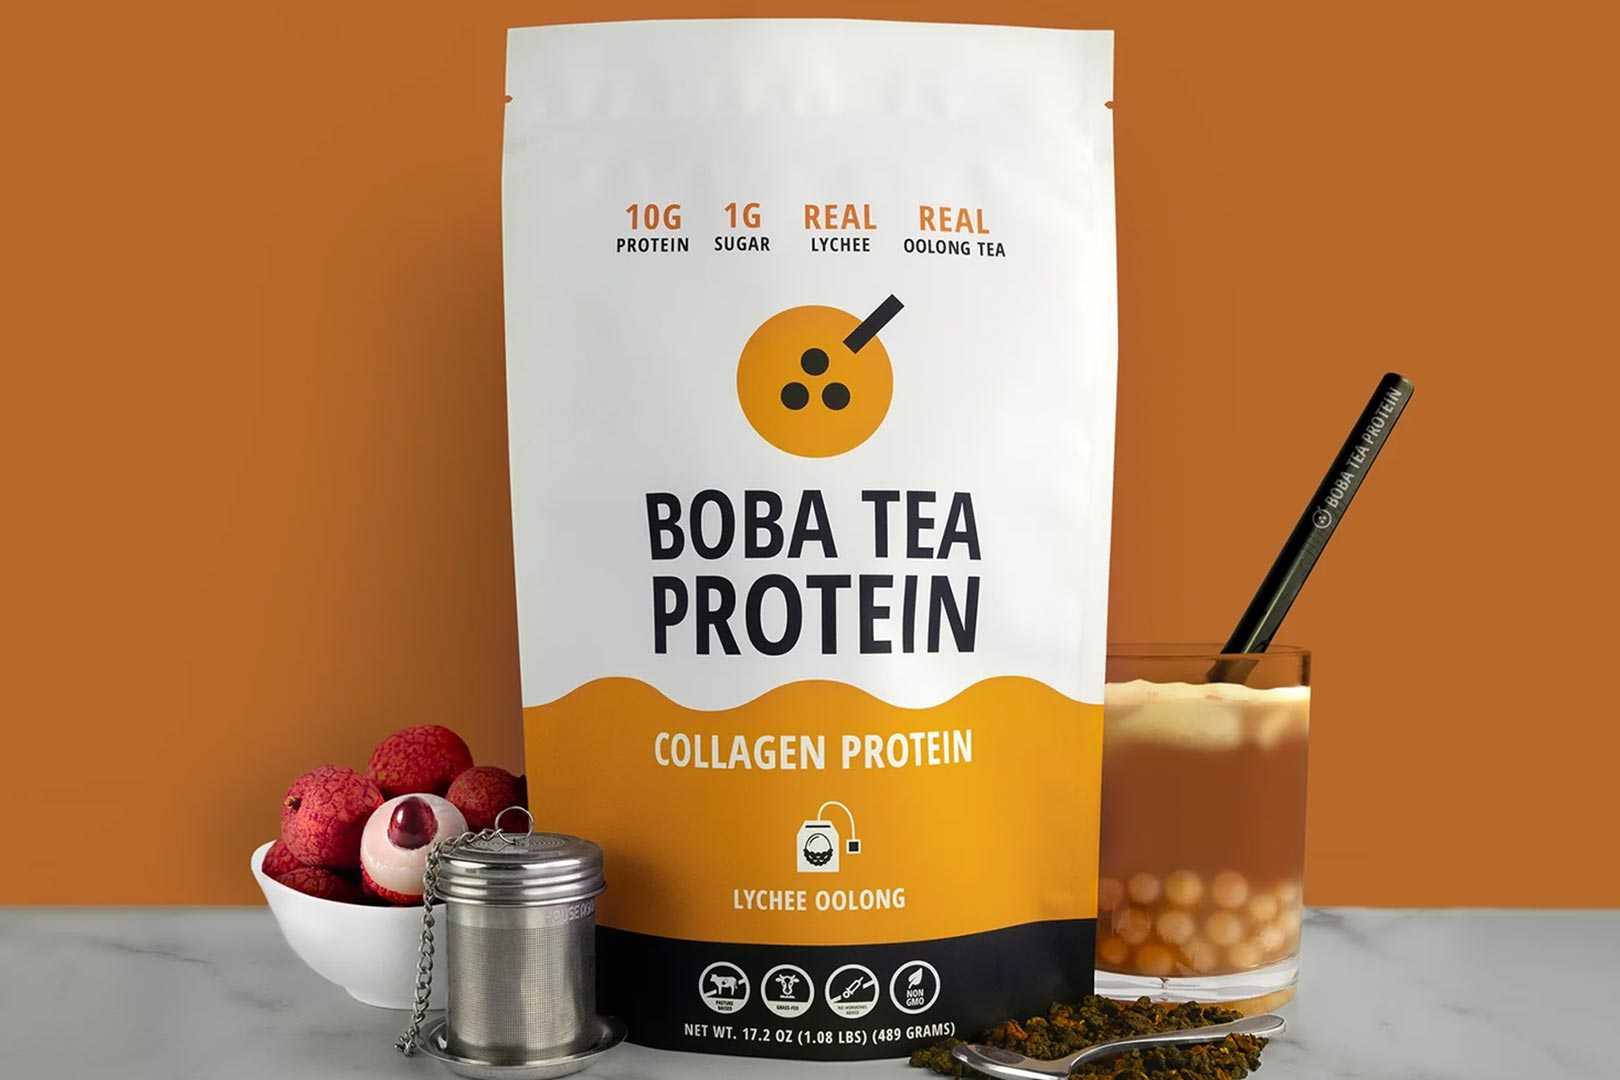 Boba Tea Protein Collagen Protein